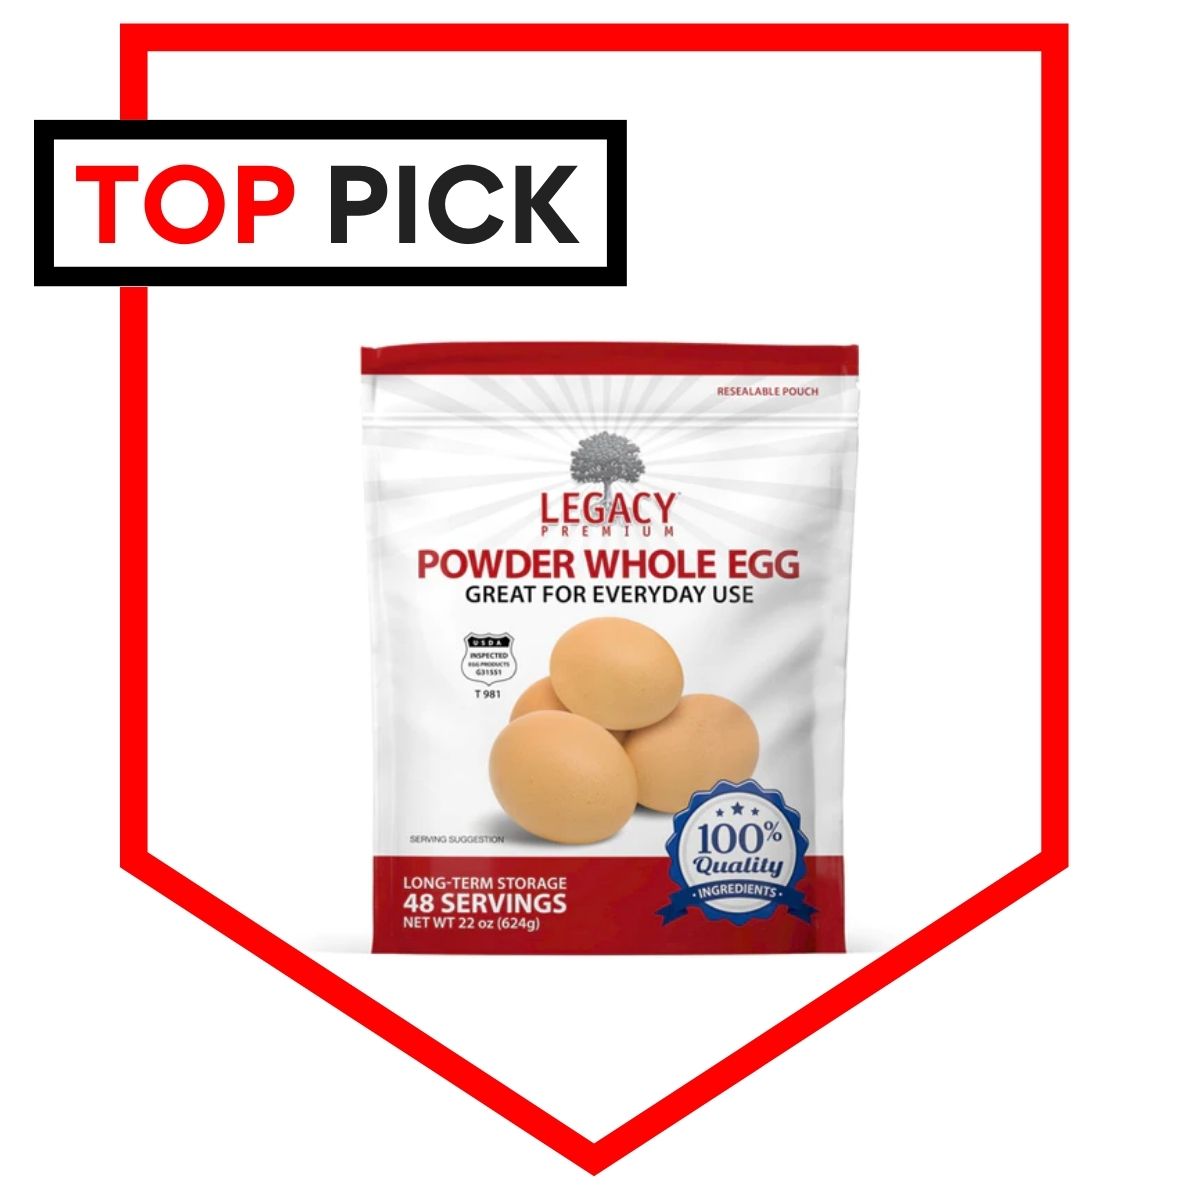 Legacy Powder Whole Egg